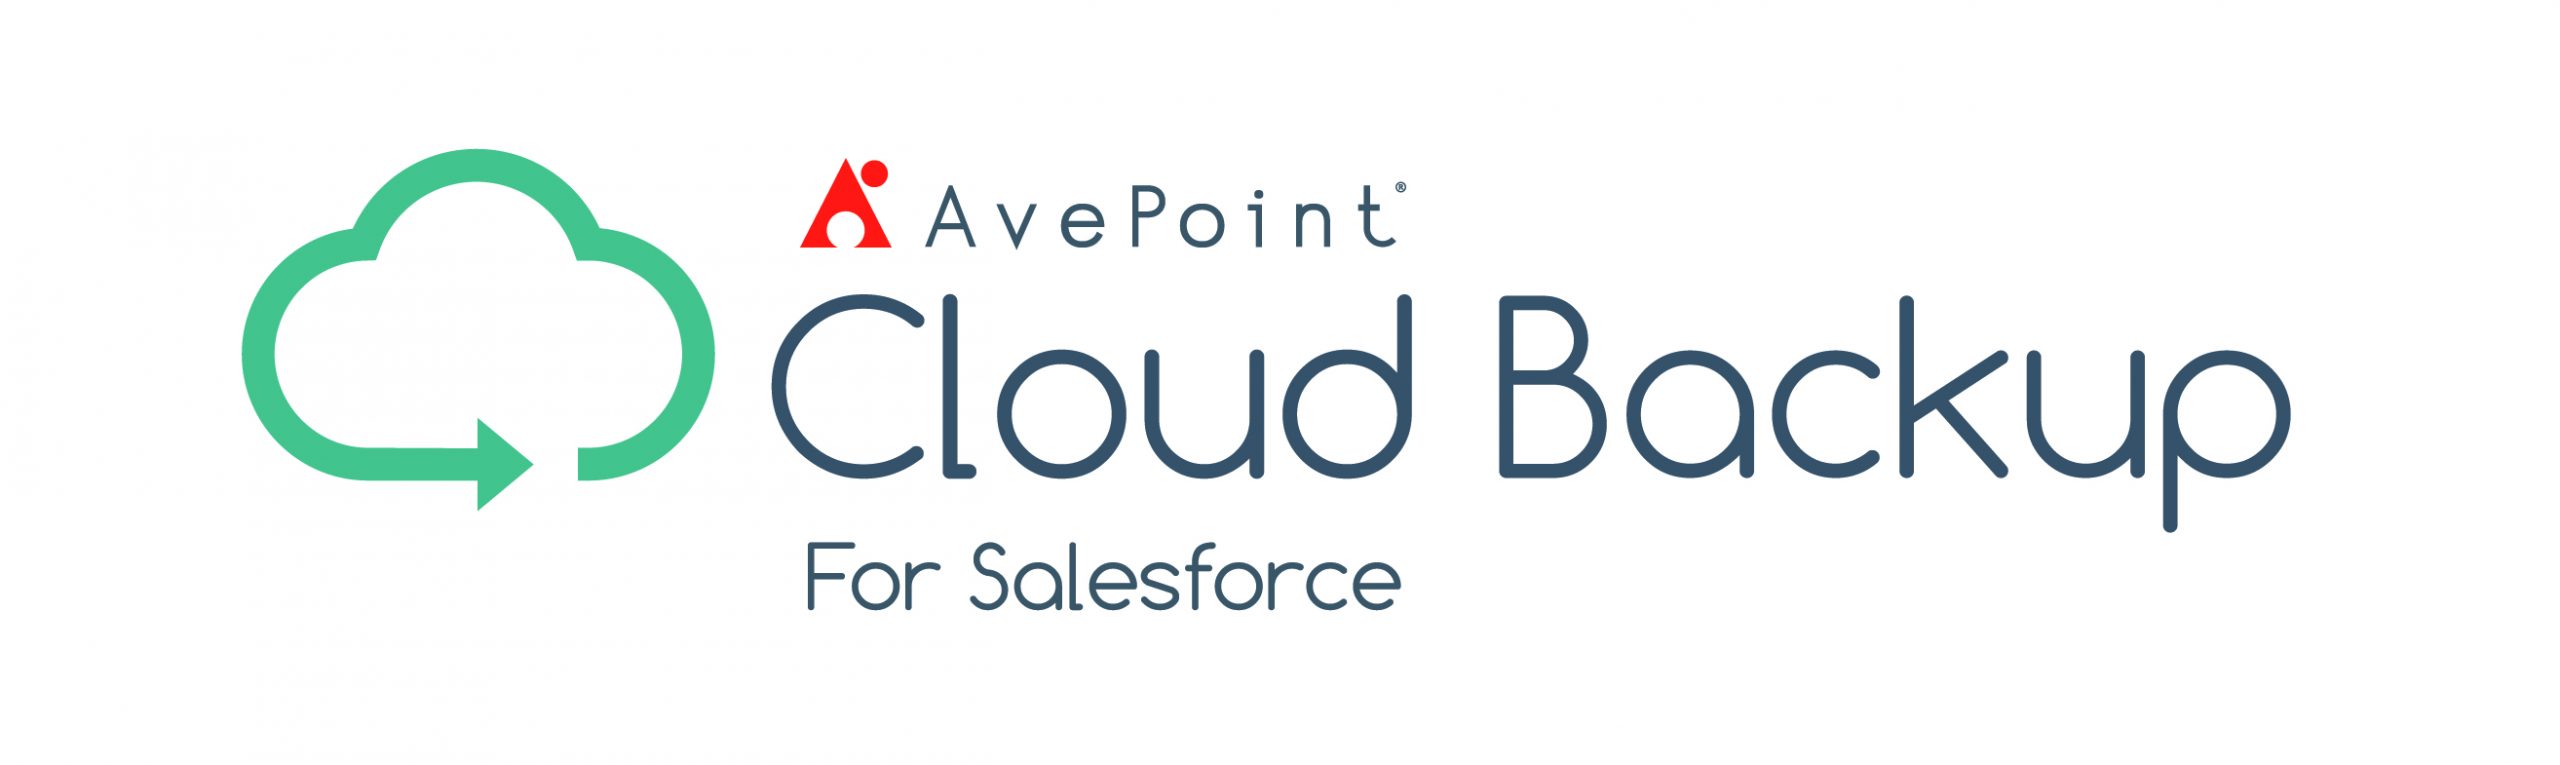 Cloud Backup for SalesForce Logo scaled